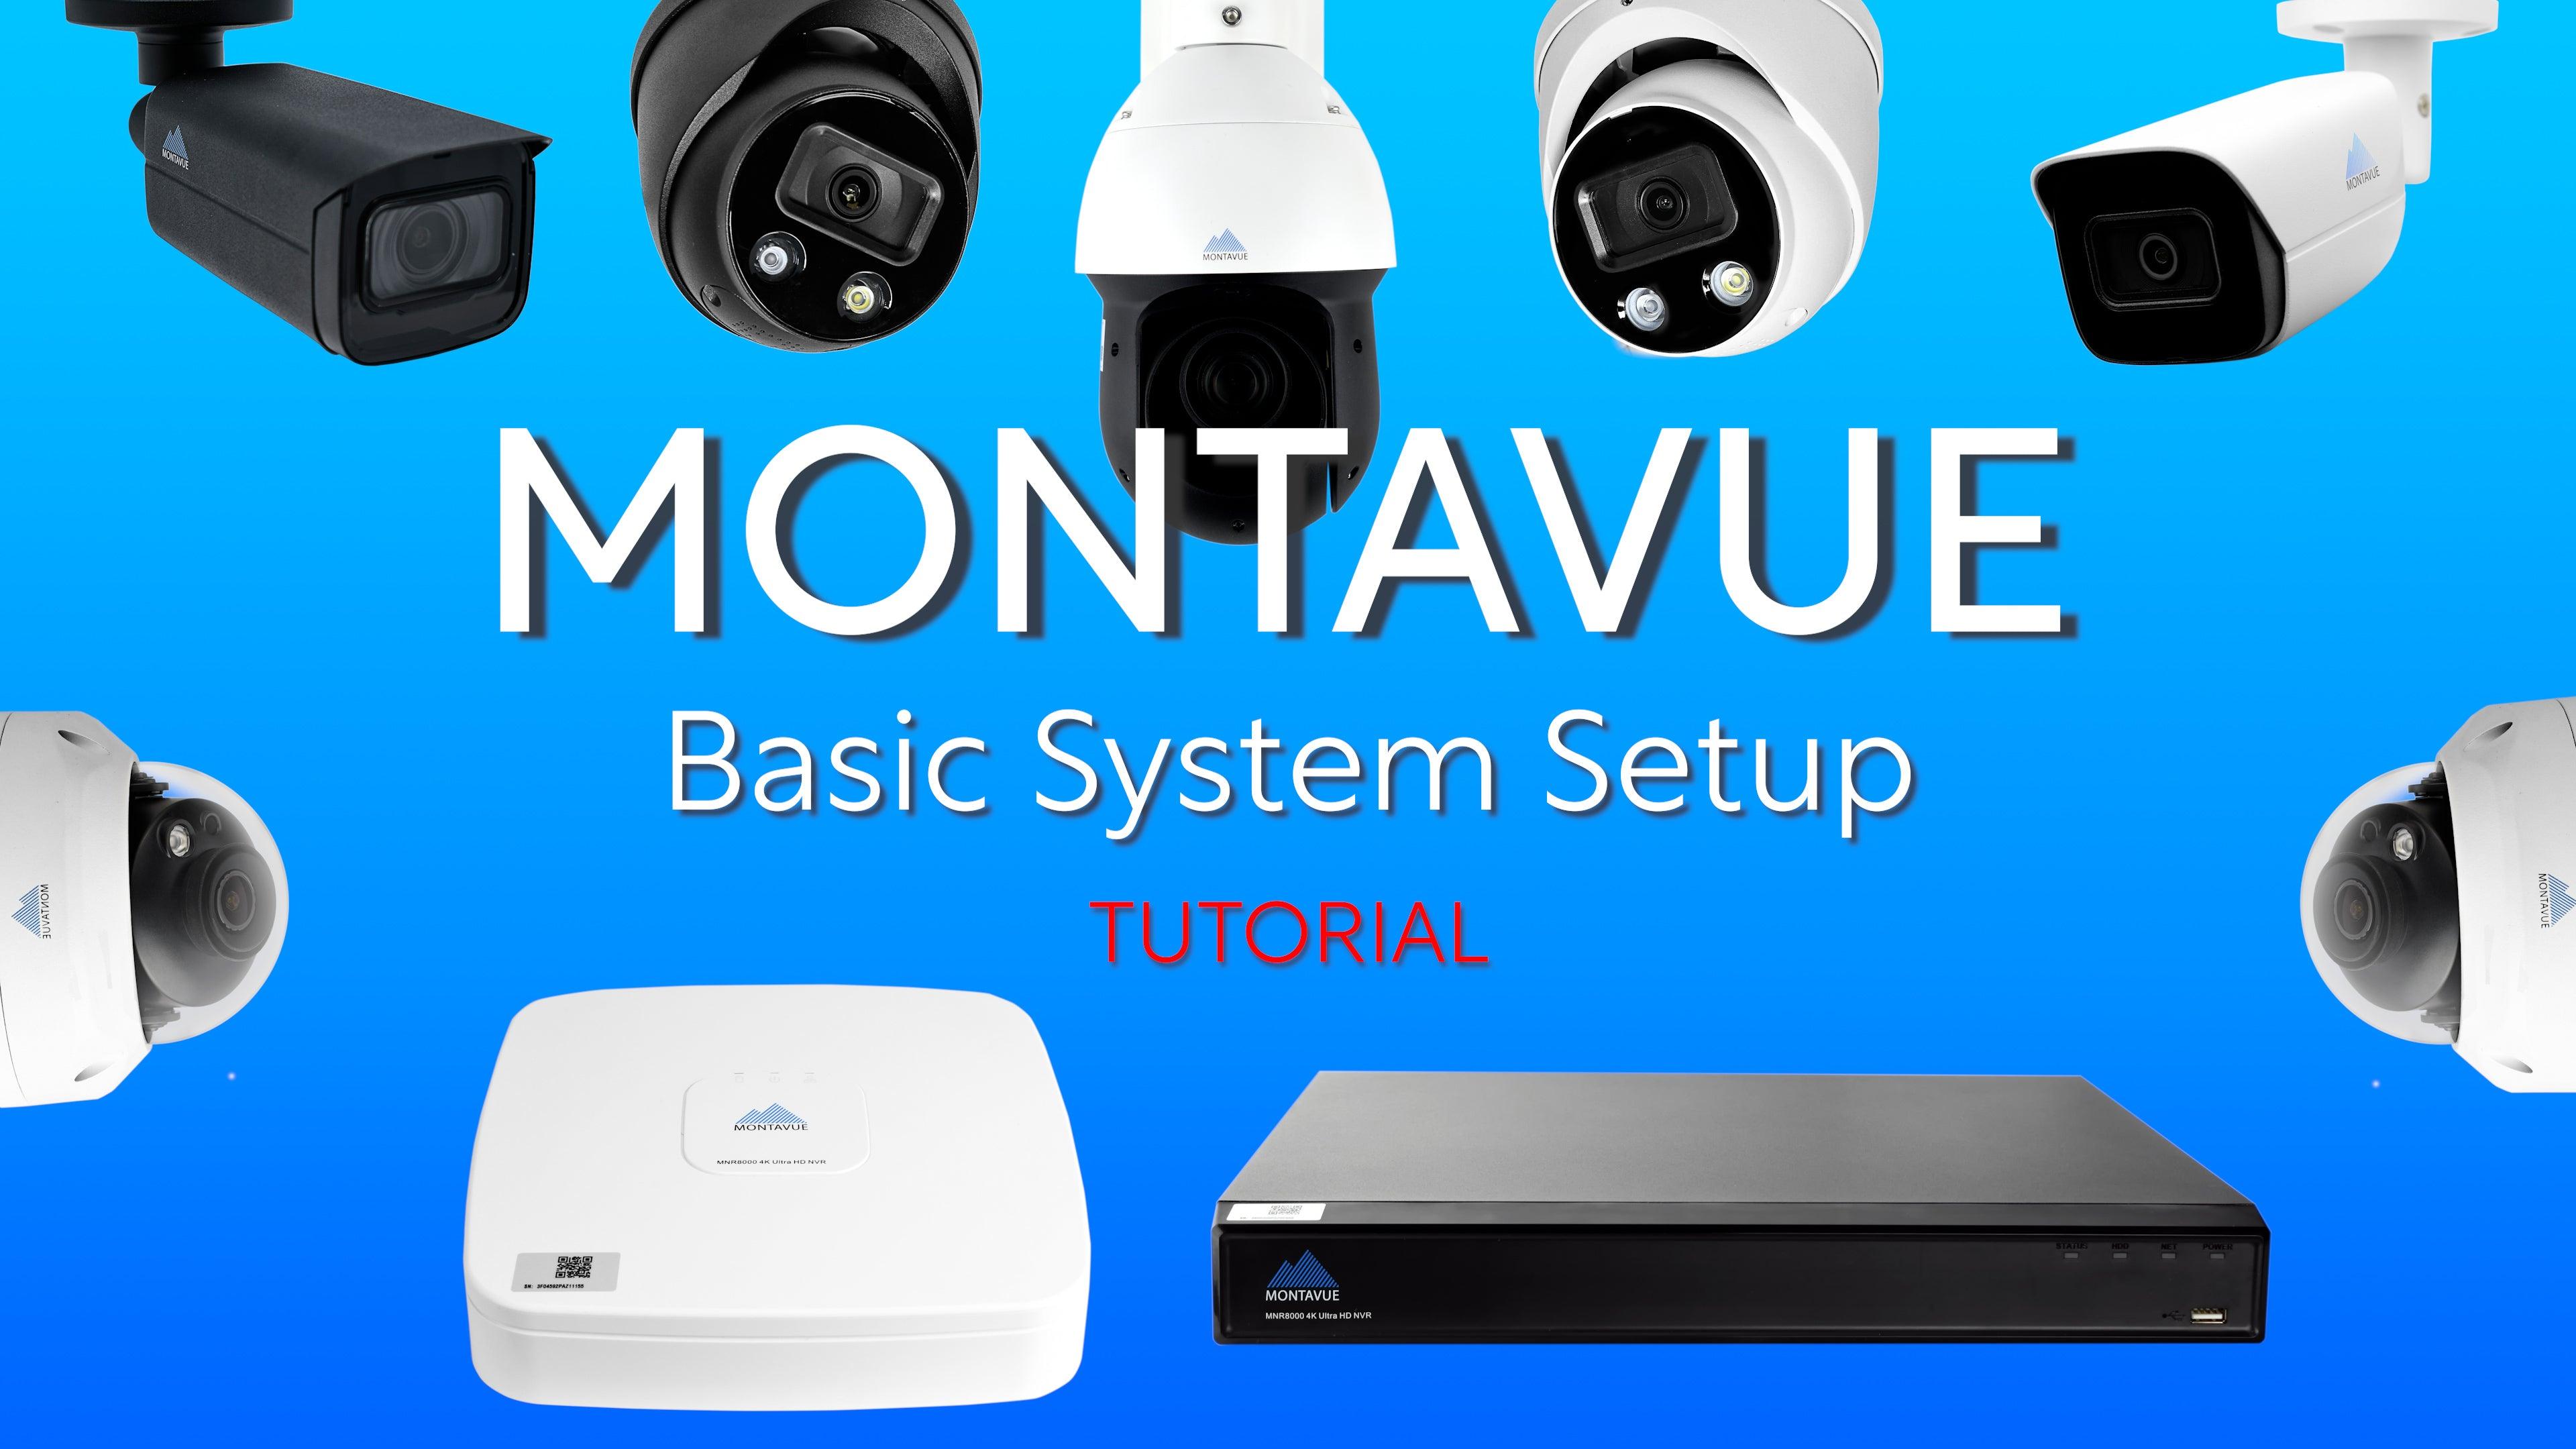 Montavue Basic System Setup Tutorial - Montavue